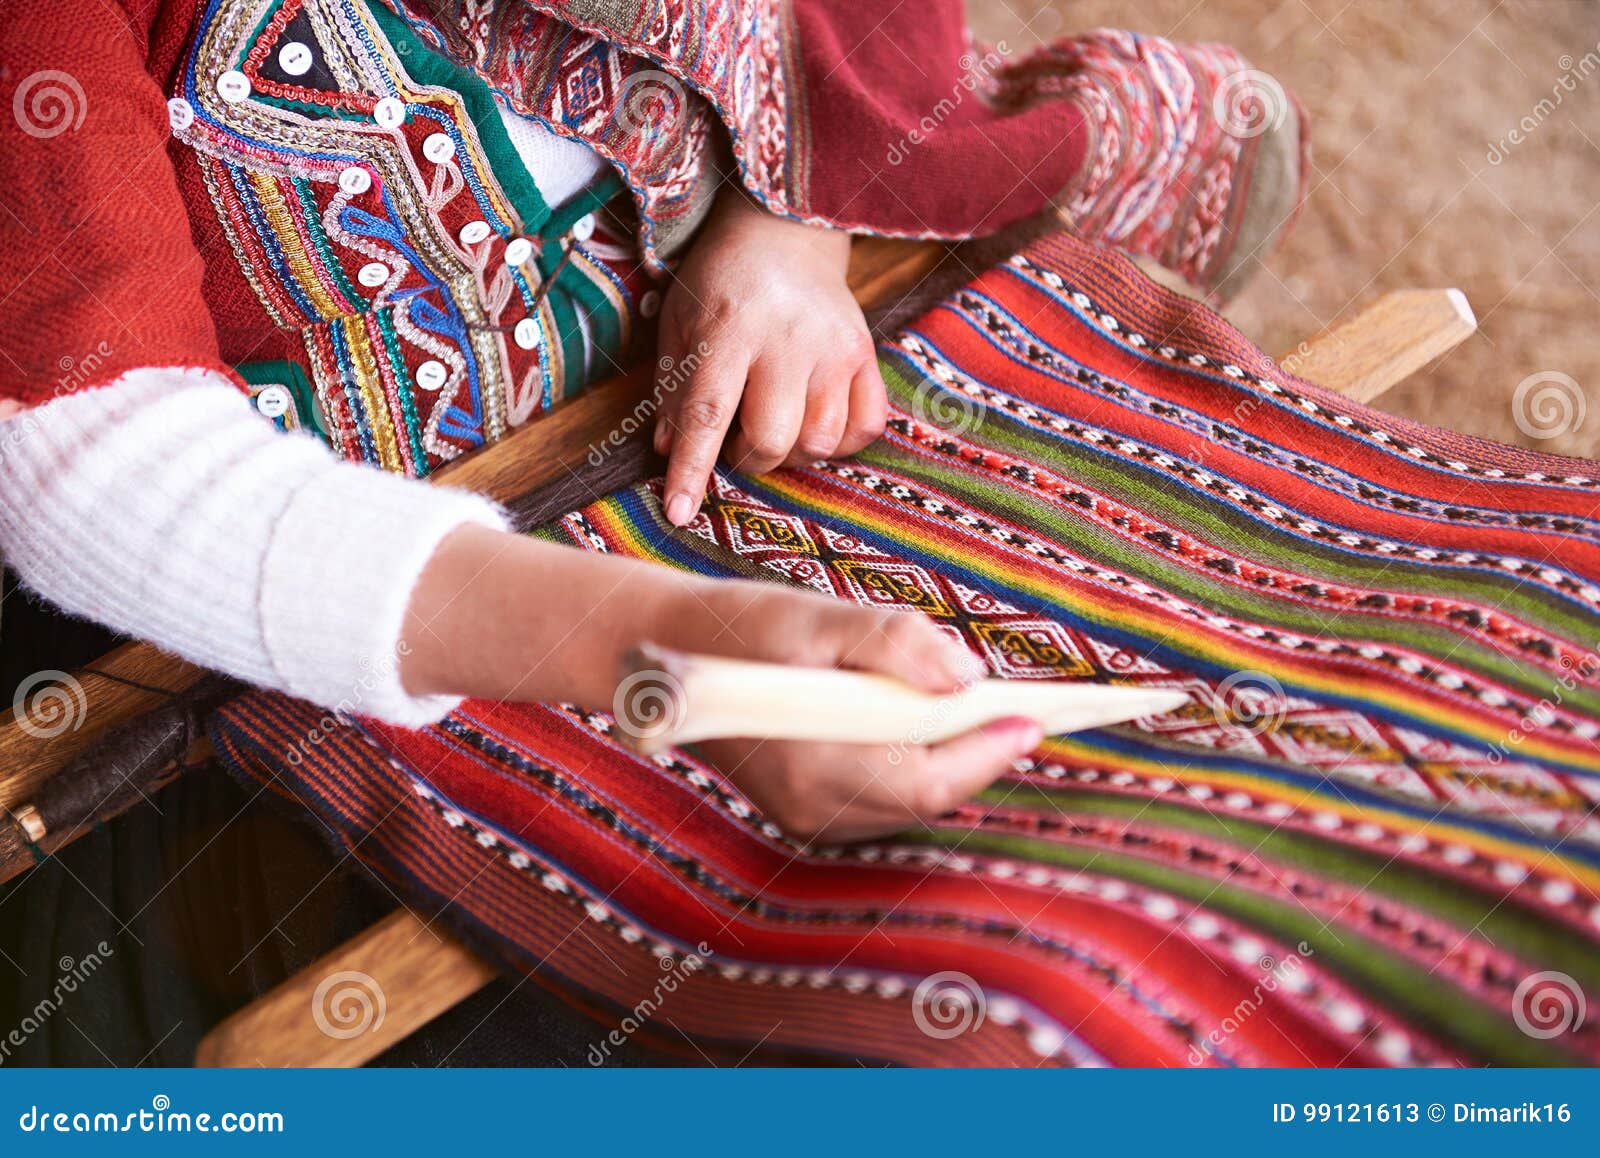 hands of peruvian woman making alpaca wool